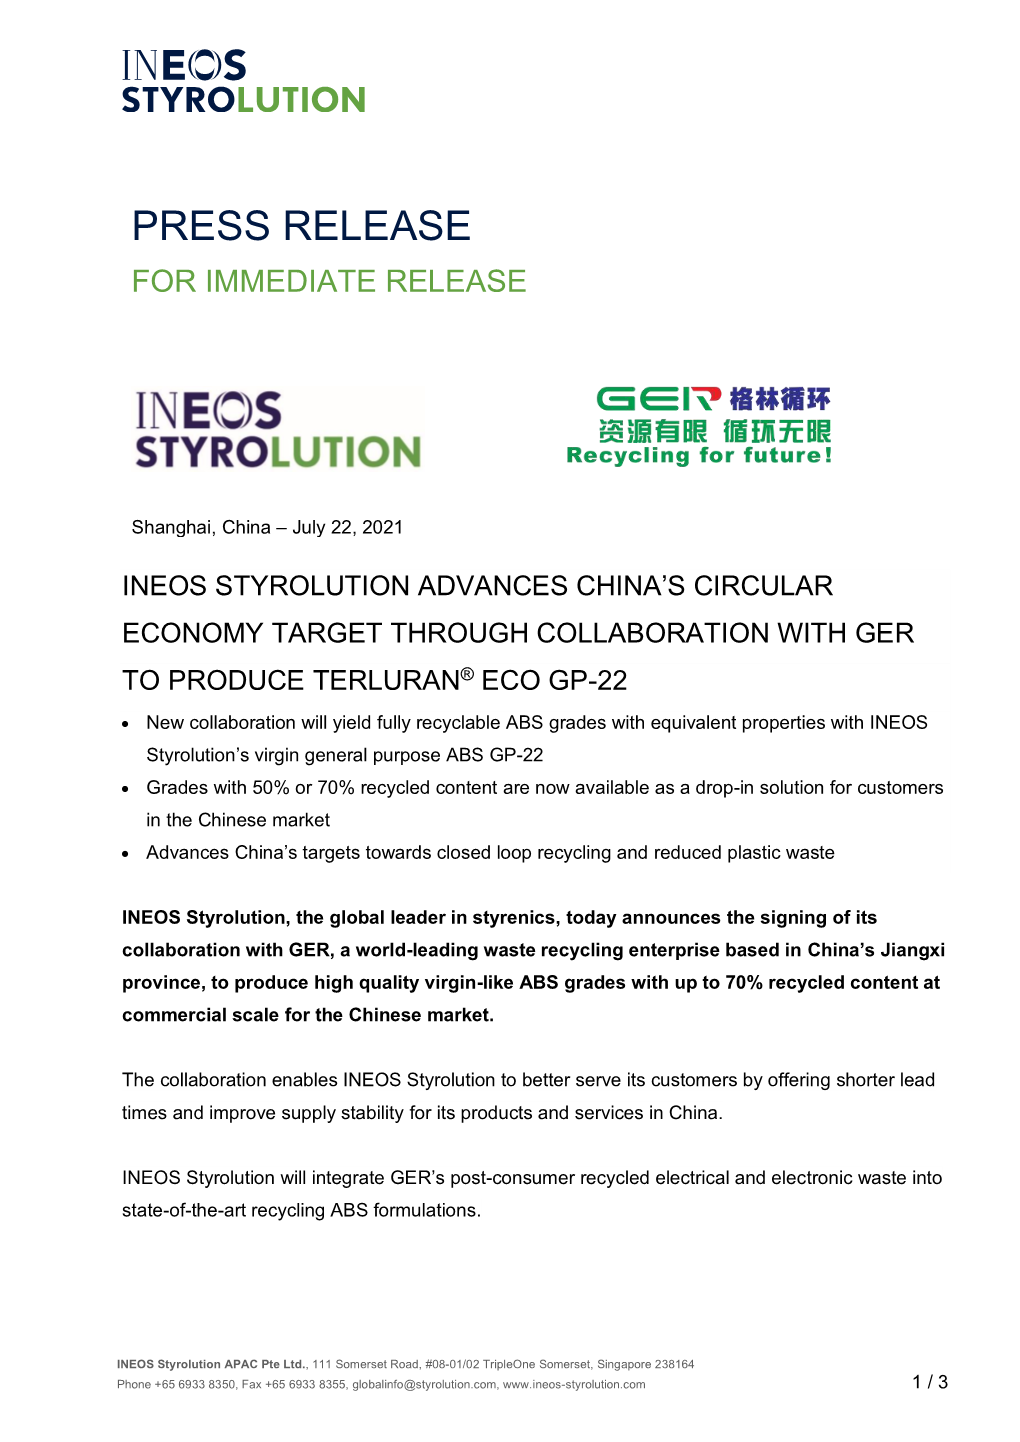 Ineos Styrolution Advances China's Circular Economy